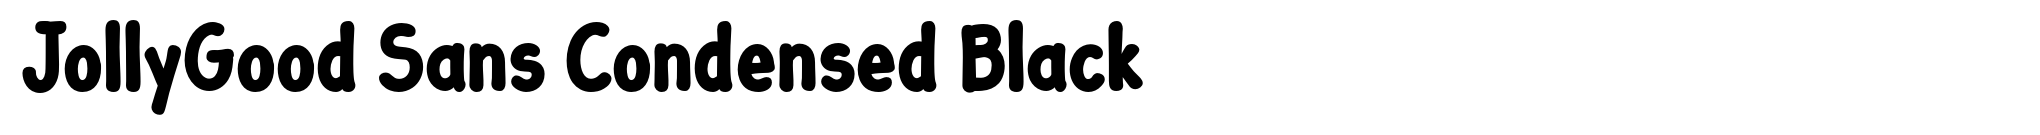 JollyGood Sans Condensed Black image